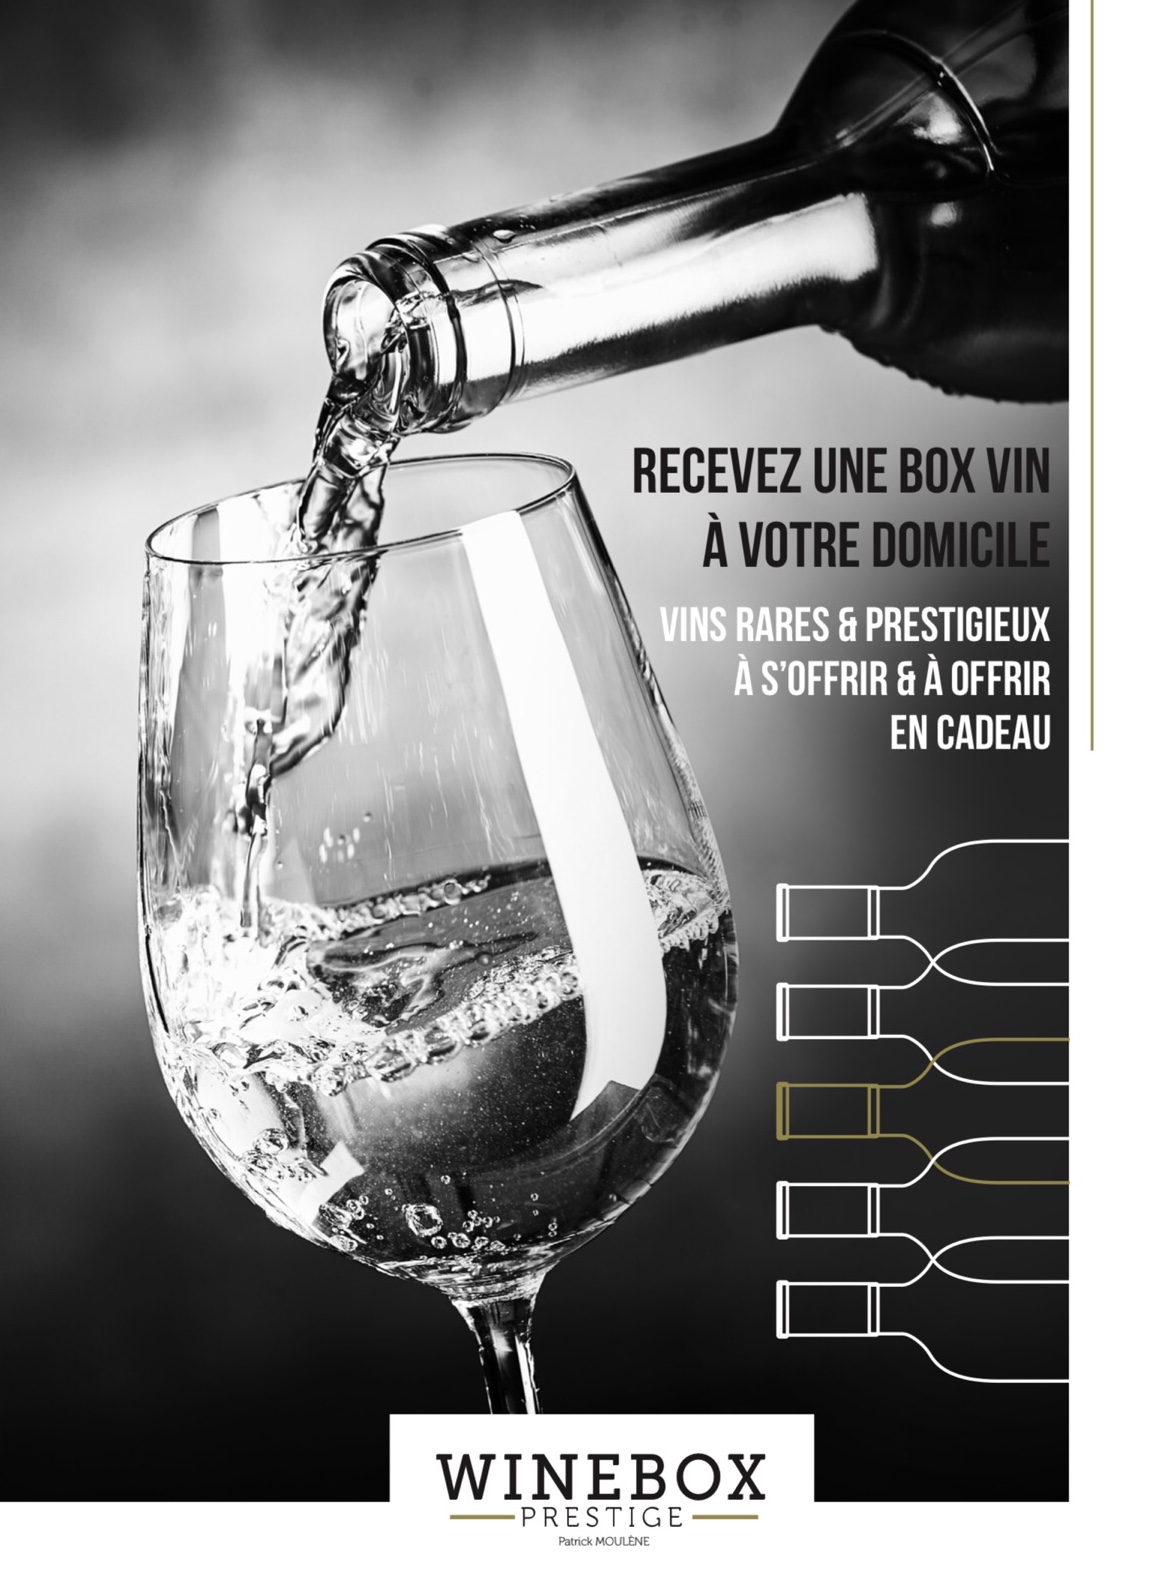 winebox-prestige-patrick-moulene-toulouse-caviste-box-de-vin.jpg